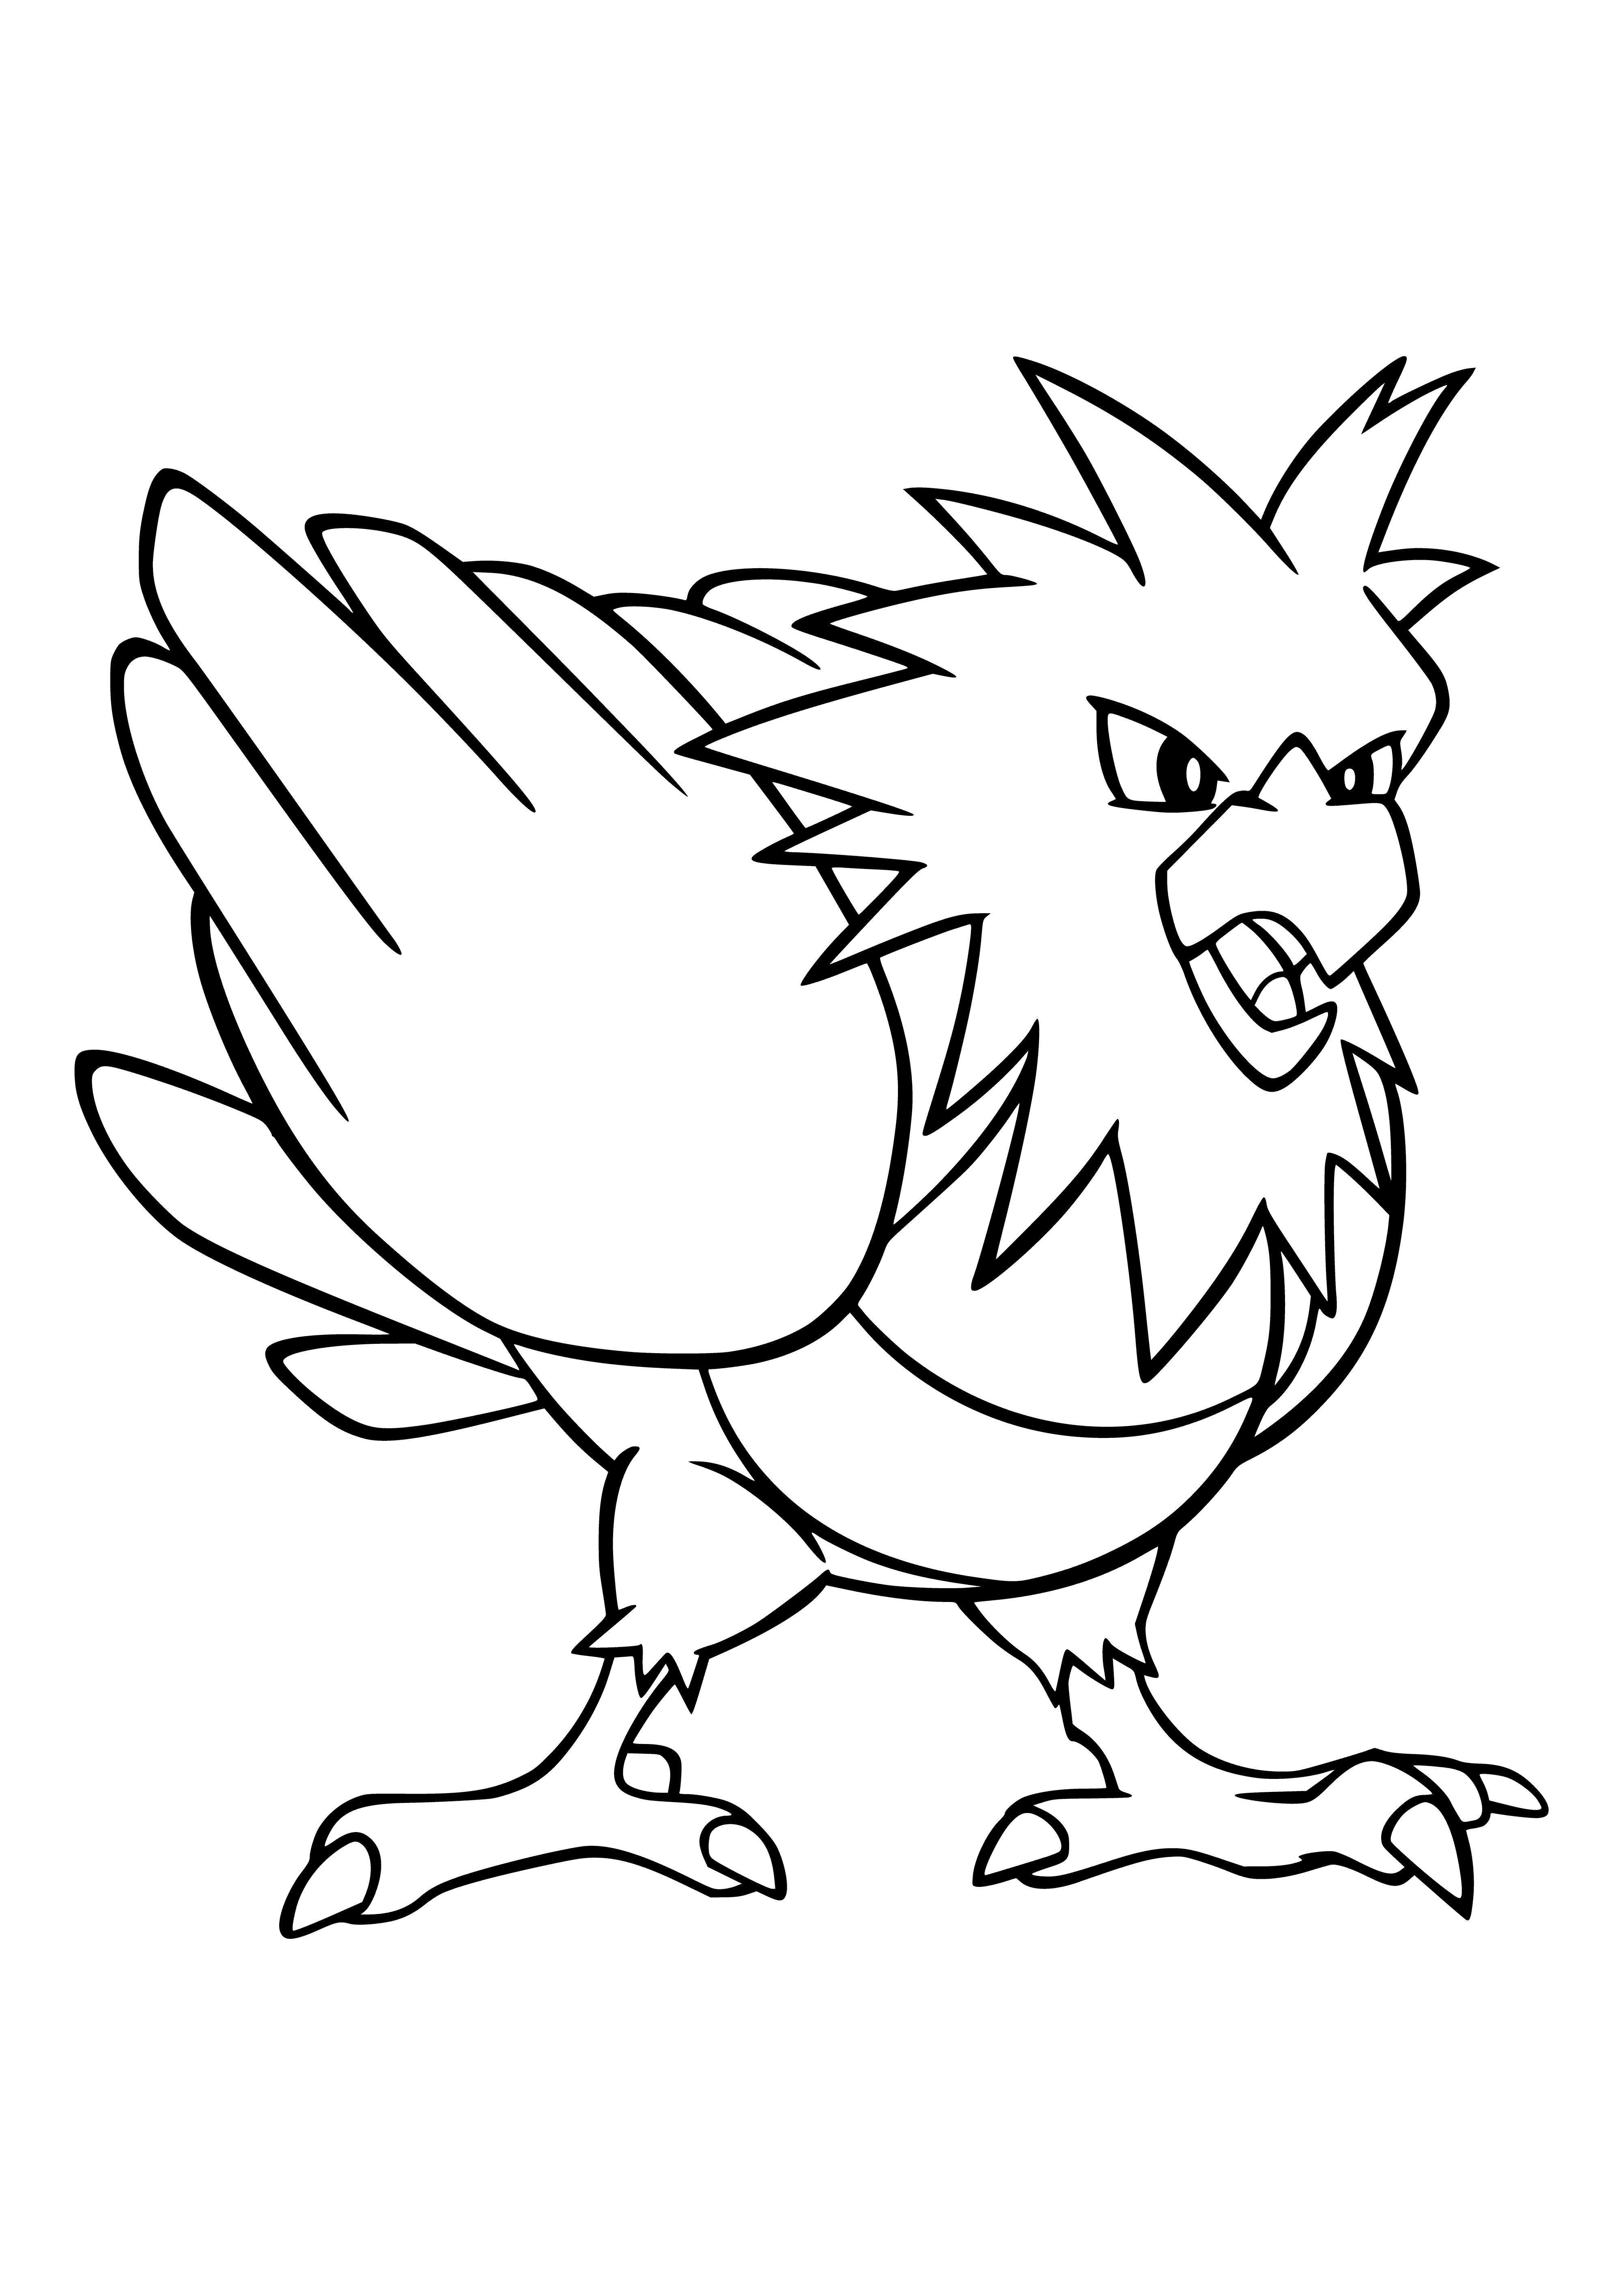 coloring page: Small brown bird Pokemon w/white belly, black crest, long thin beak, black wings w/white stripes & red feet.